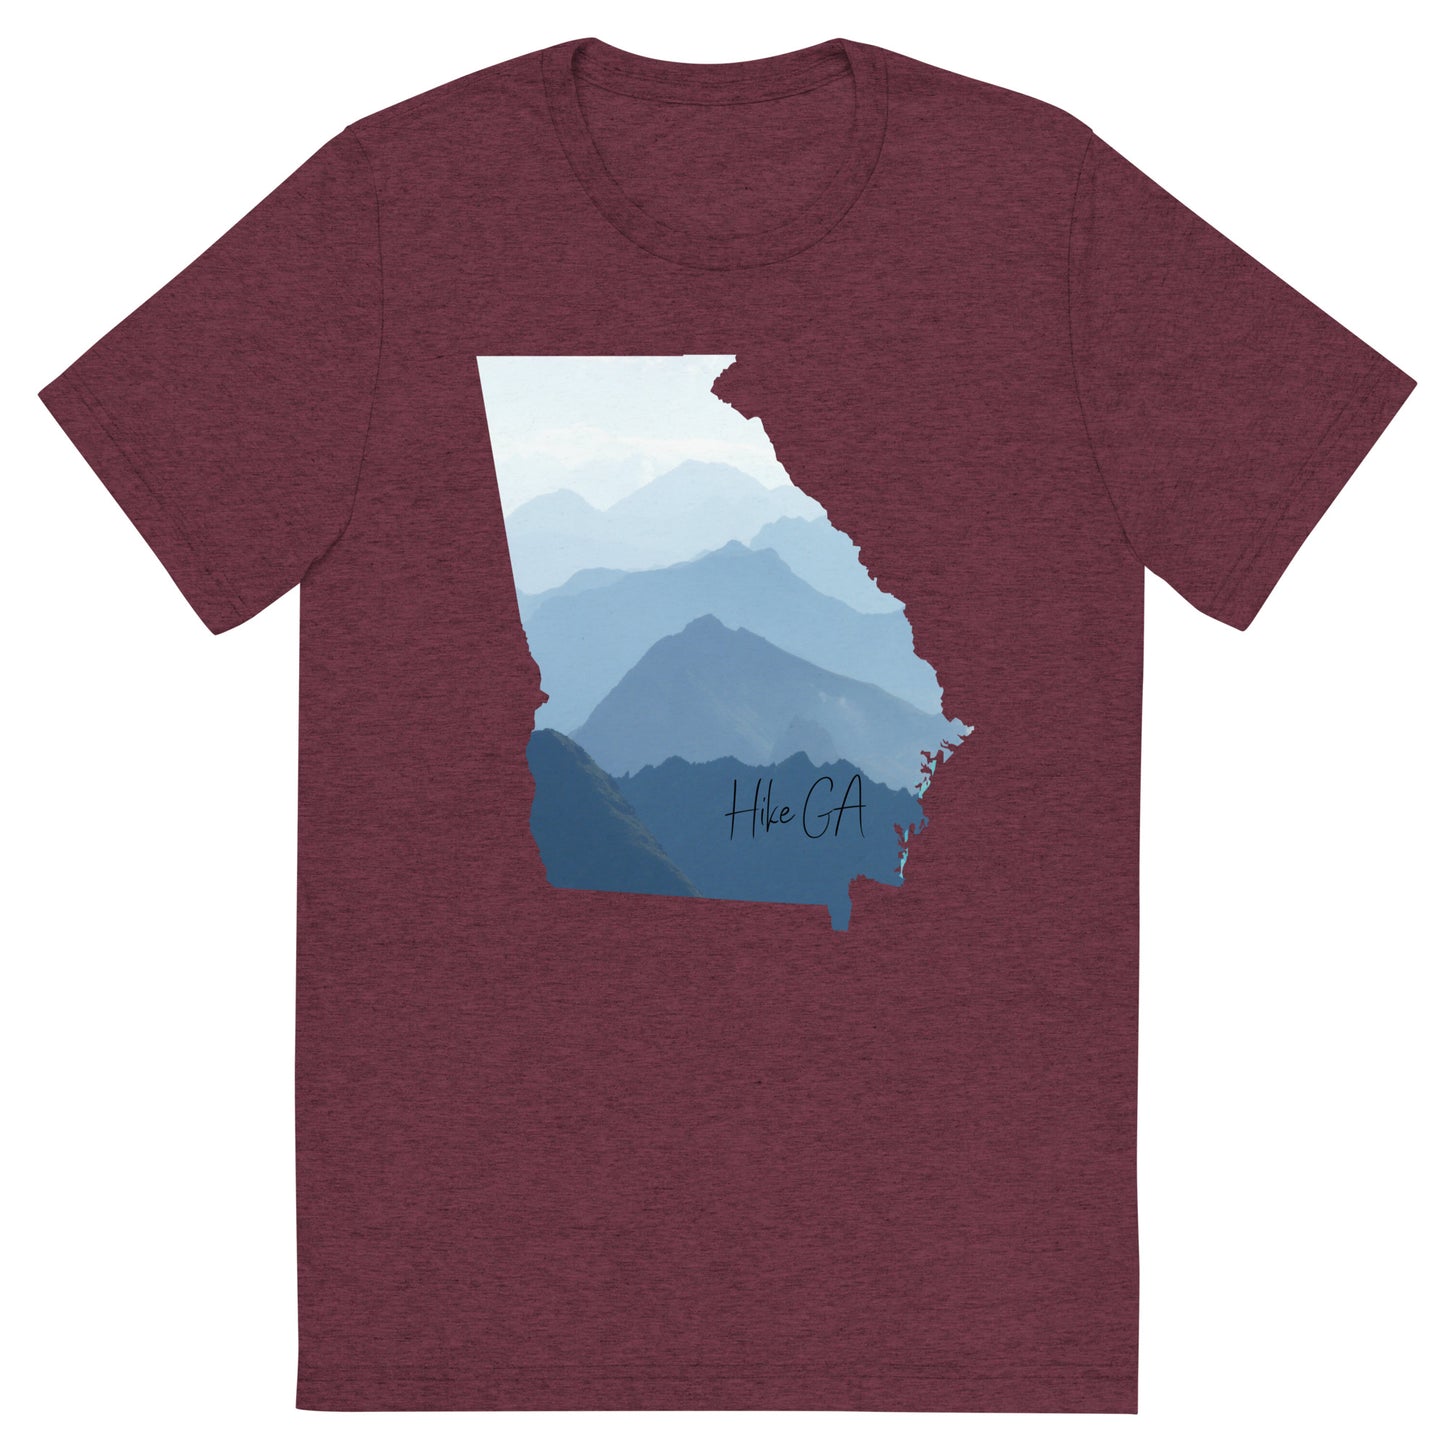 Hike GA - Unisex Tri-blend - Short sleeve t-shirt